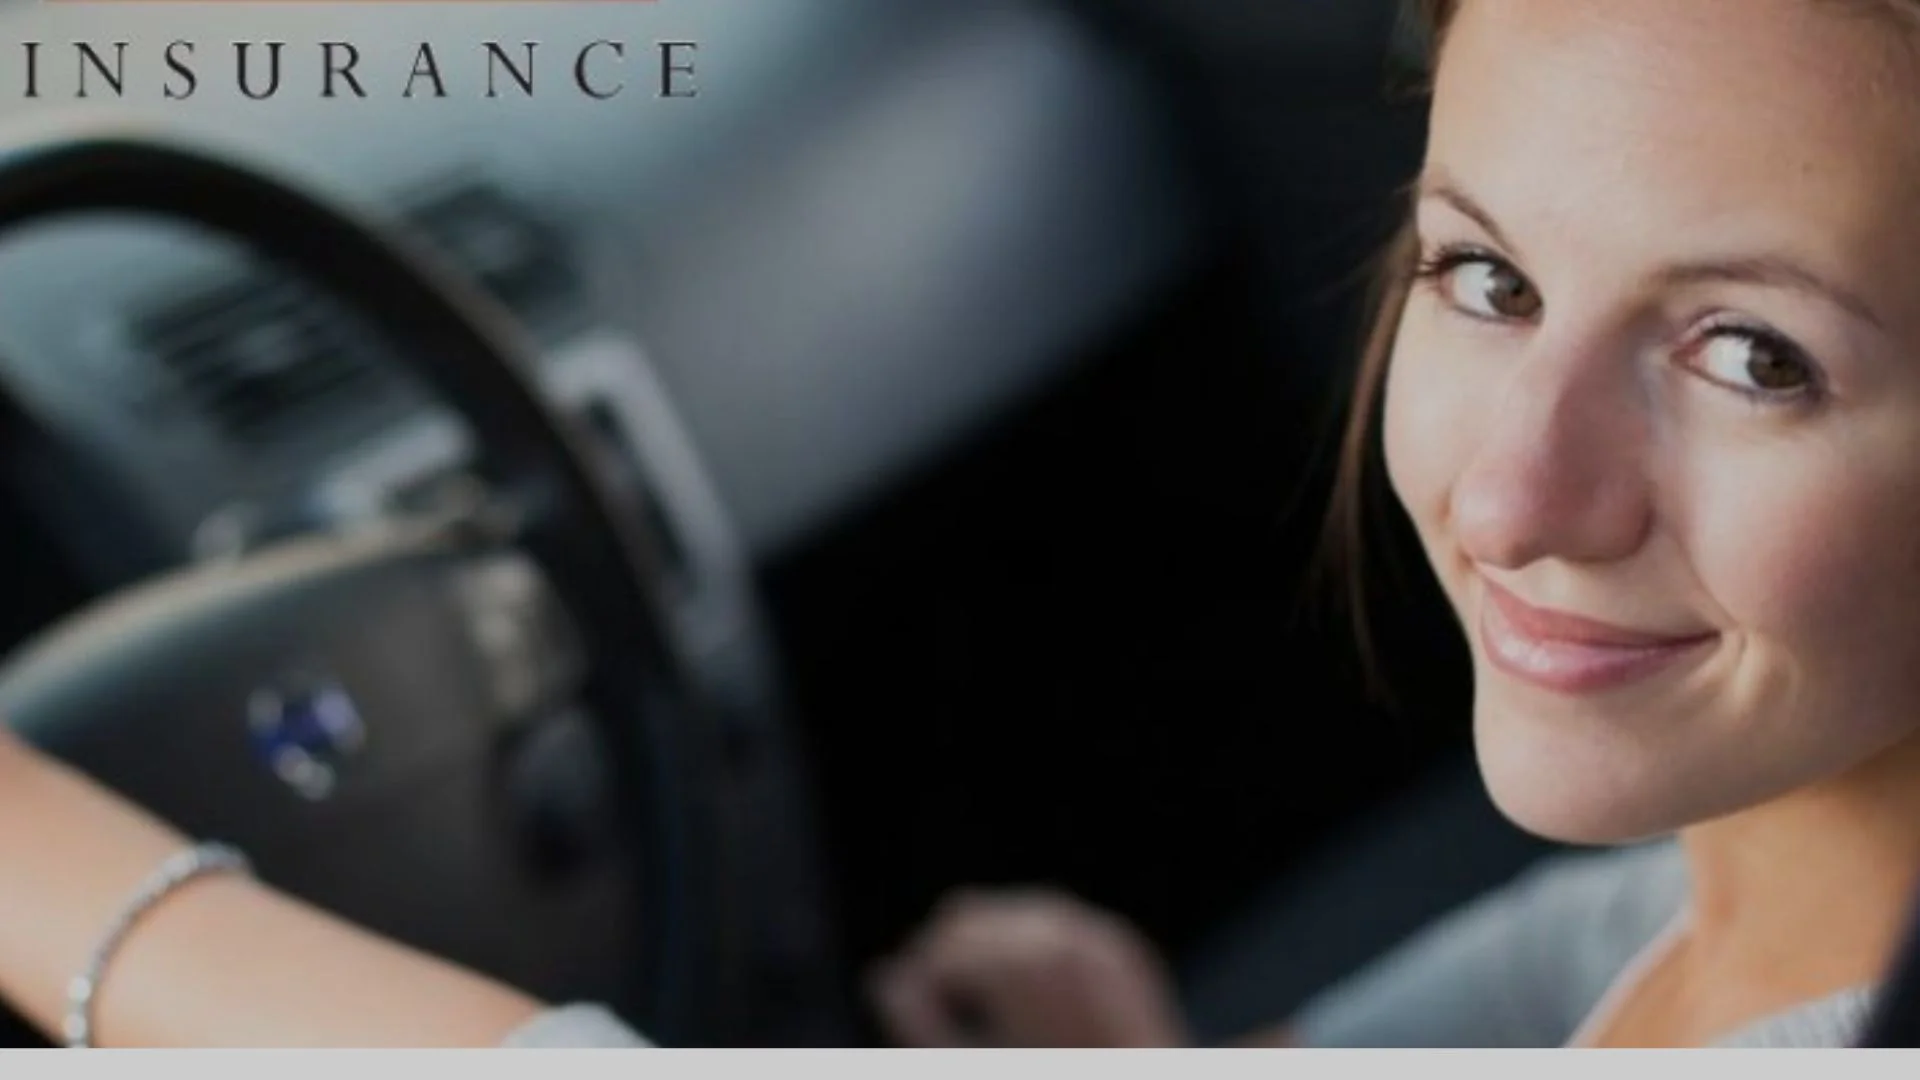 Navigating Auto Insurance